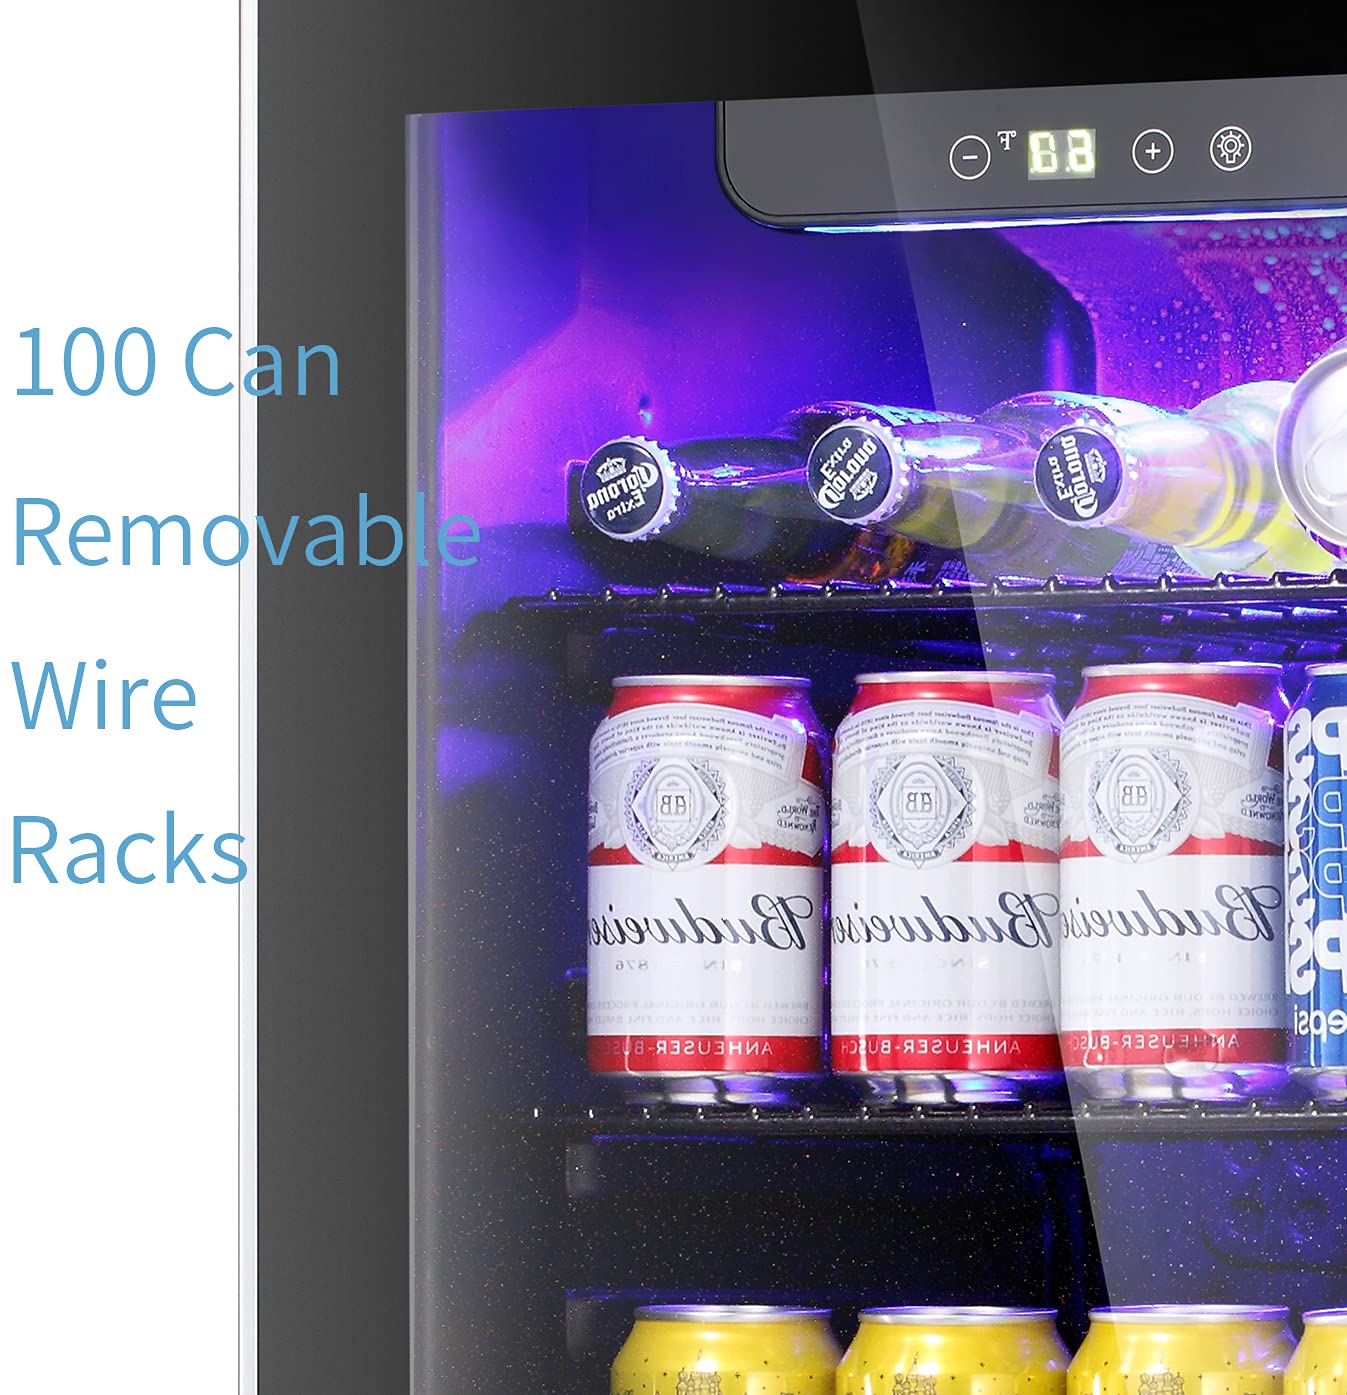 Antarctic Star Beverage Refrigerator Cooler, 100 Can Mini Fridge Glass Door for Soda Beer or Wine Glass Door Small Drink Dispenser Adjustable Clear Front for Home, Office or Bar, 3.1cu.ft.…